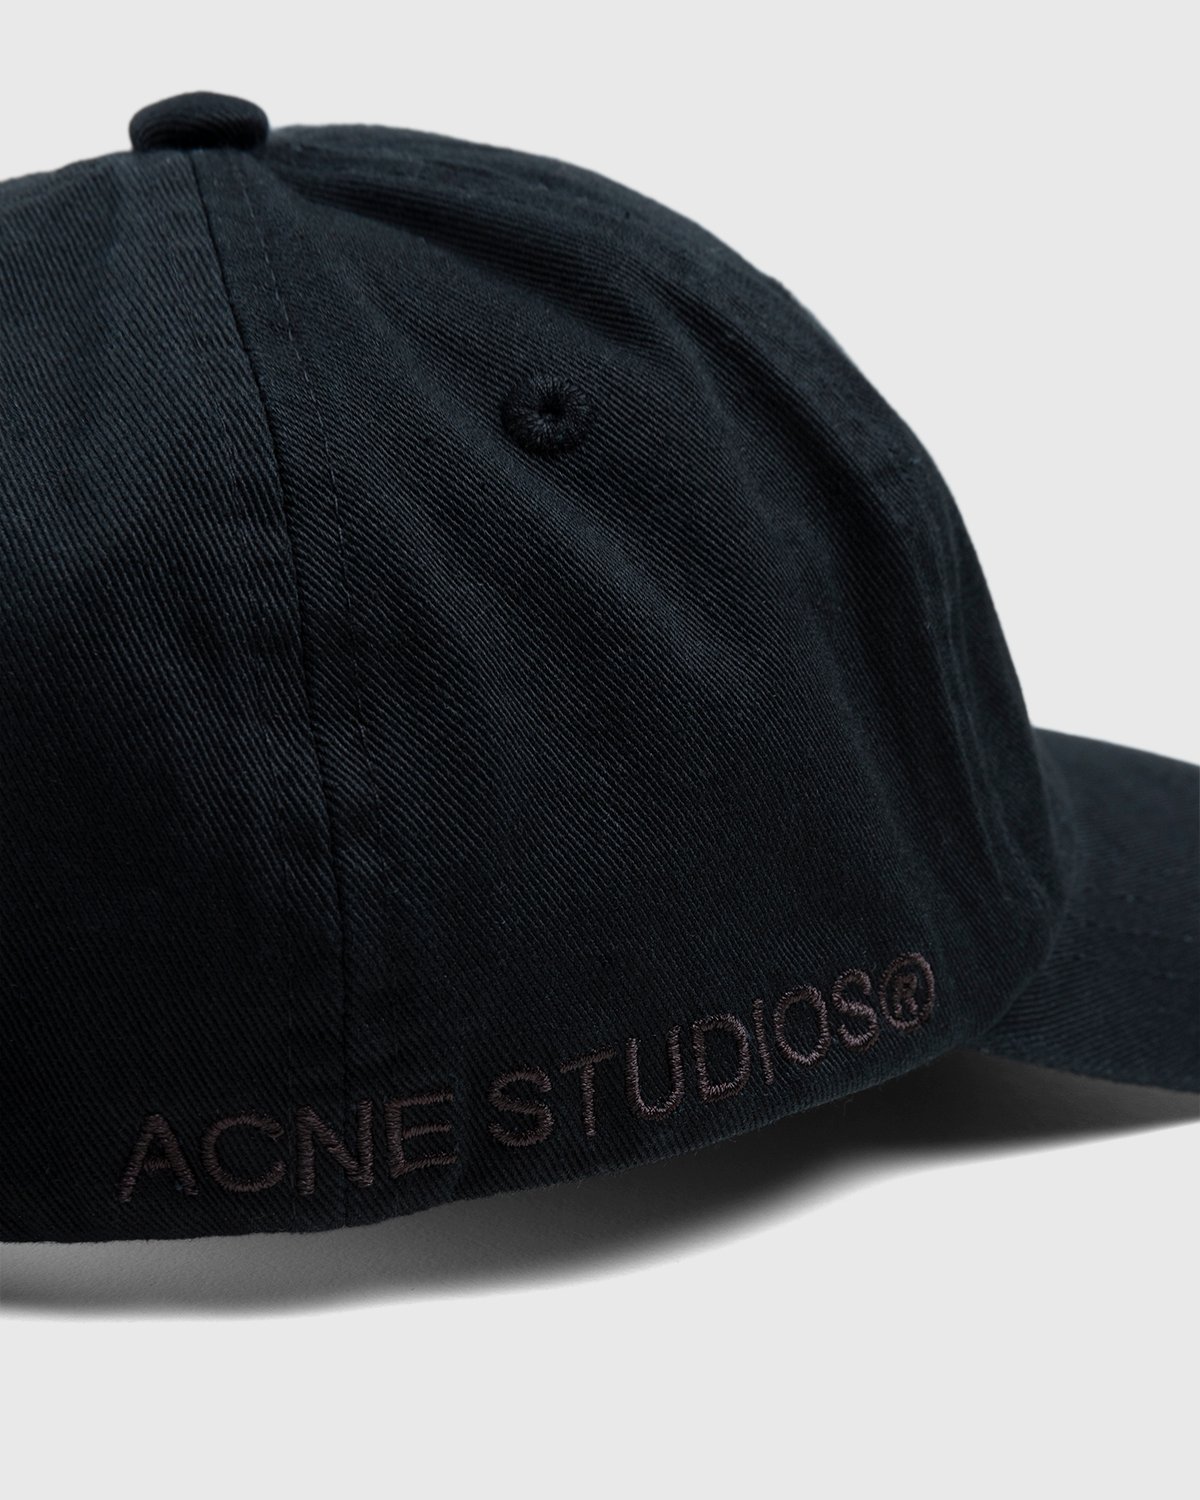 Acne Studios - Cotton Baseball Cap Black - Accessories - Black - Image 5